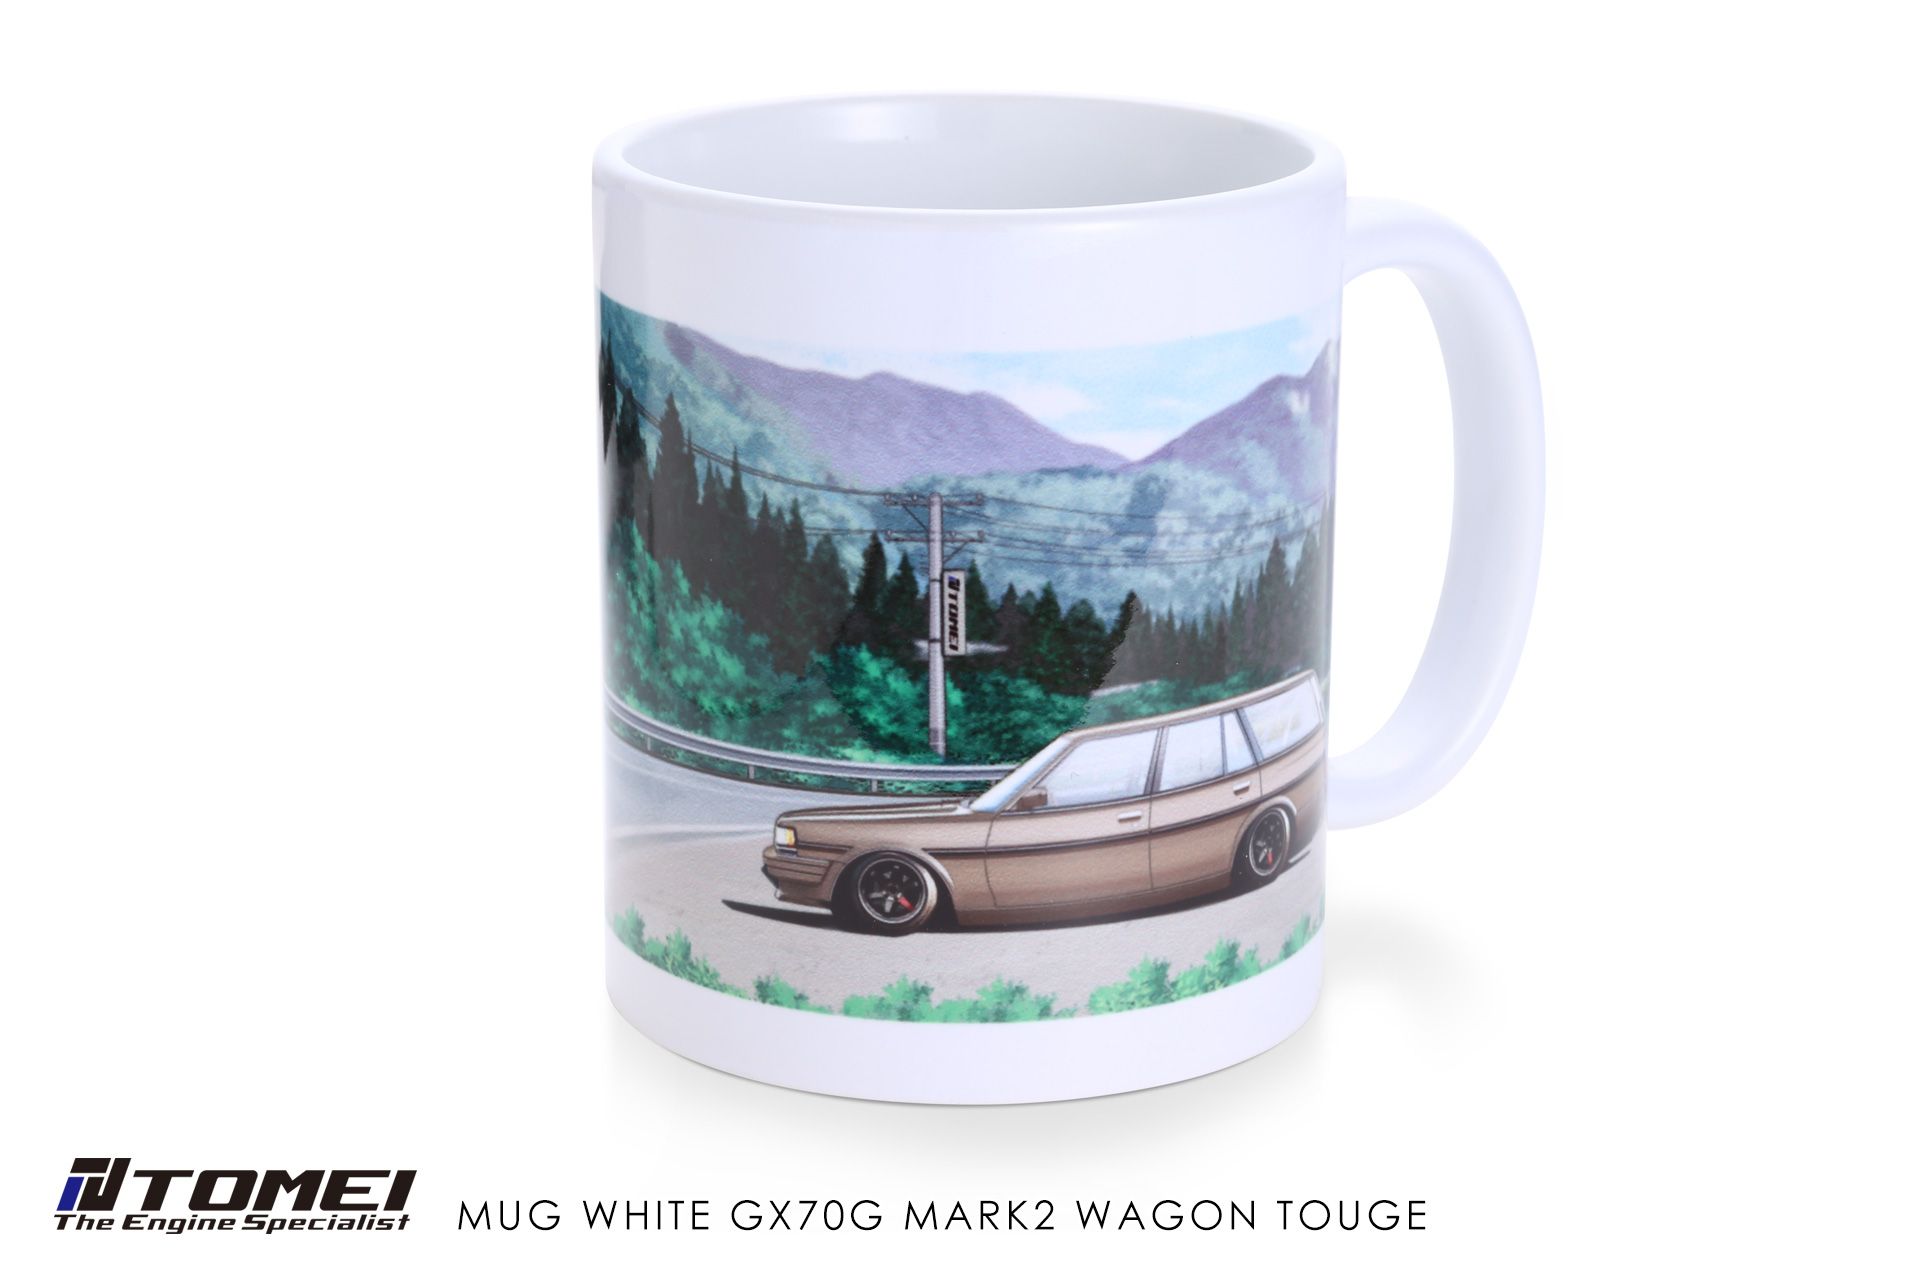 Tomei Mug White GX70G Mark-2 Wagon Touge